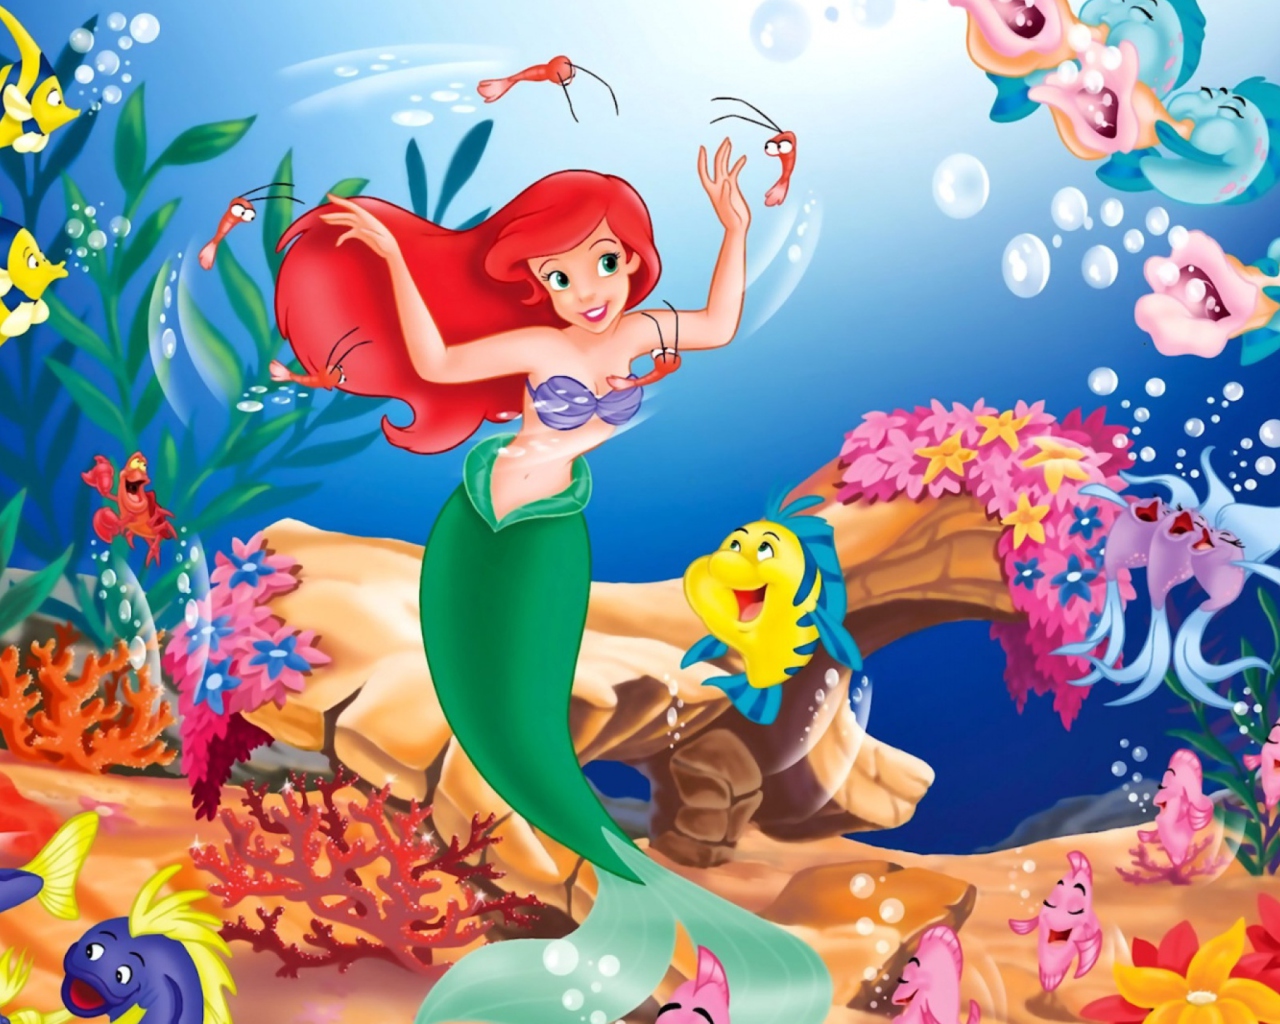 Disney - The Little Mermaid wallpaper 1280x1024